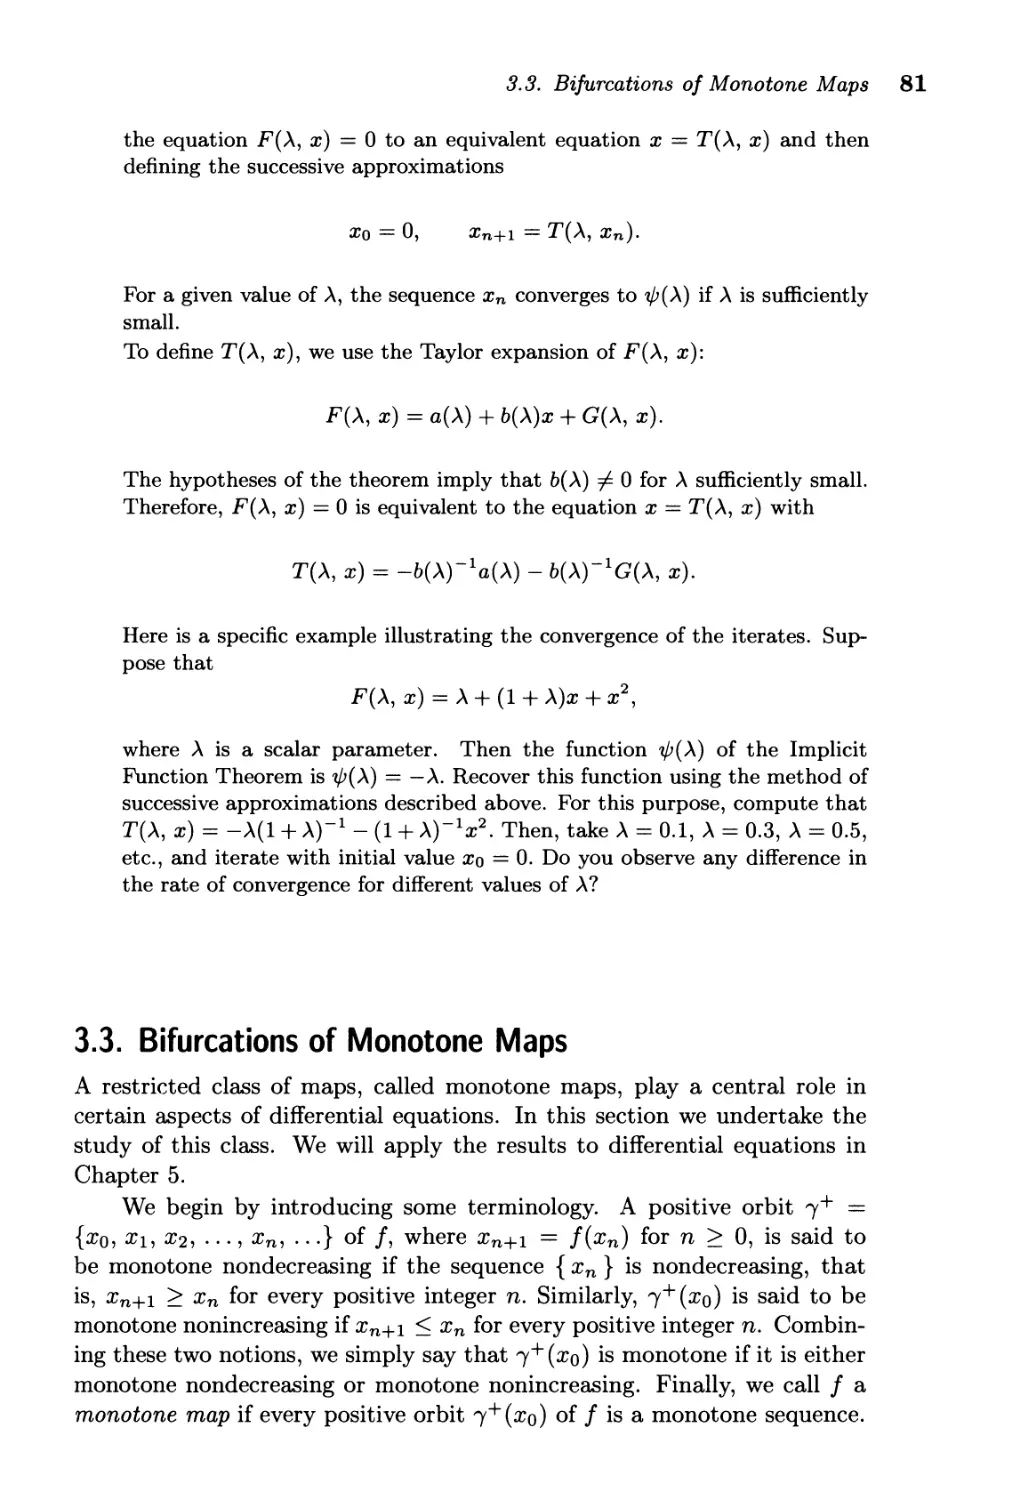 3.3. Bifurcations of Monotone Maps